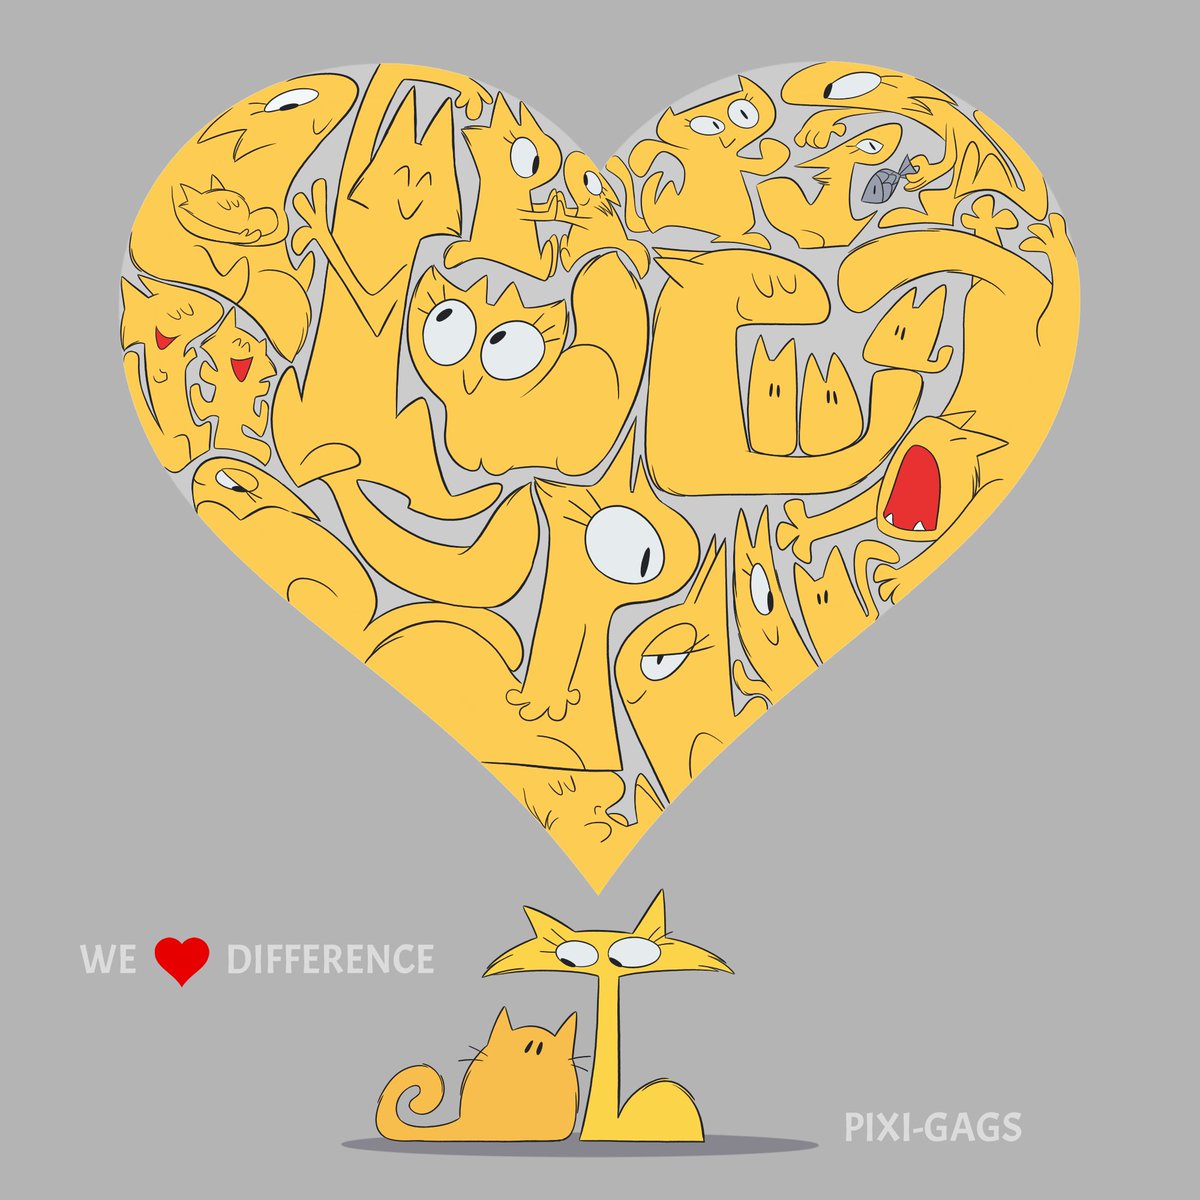 ' WE ❤️ DIFFERENCE'
 
#Resonance #Neurodiversity #pixi_gags #design  #illustration #art #CharacterCreation #digitalart